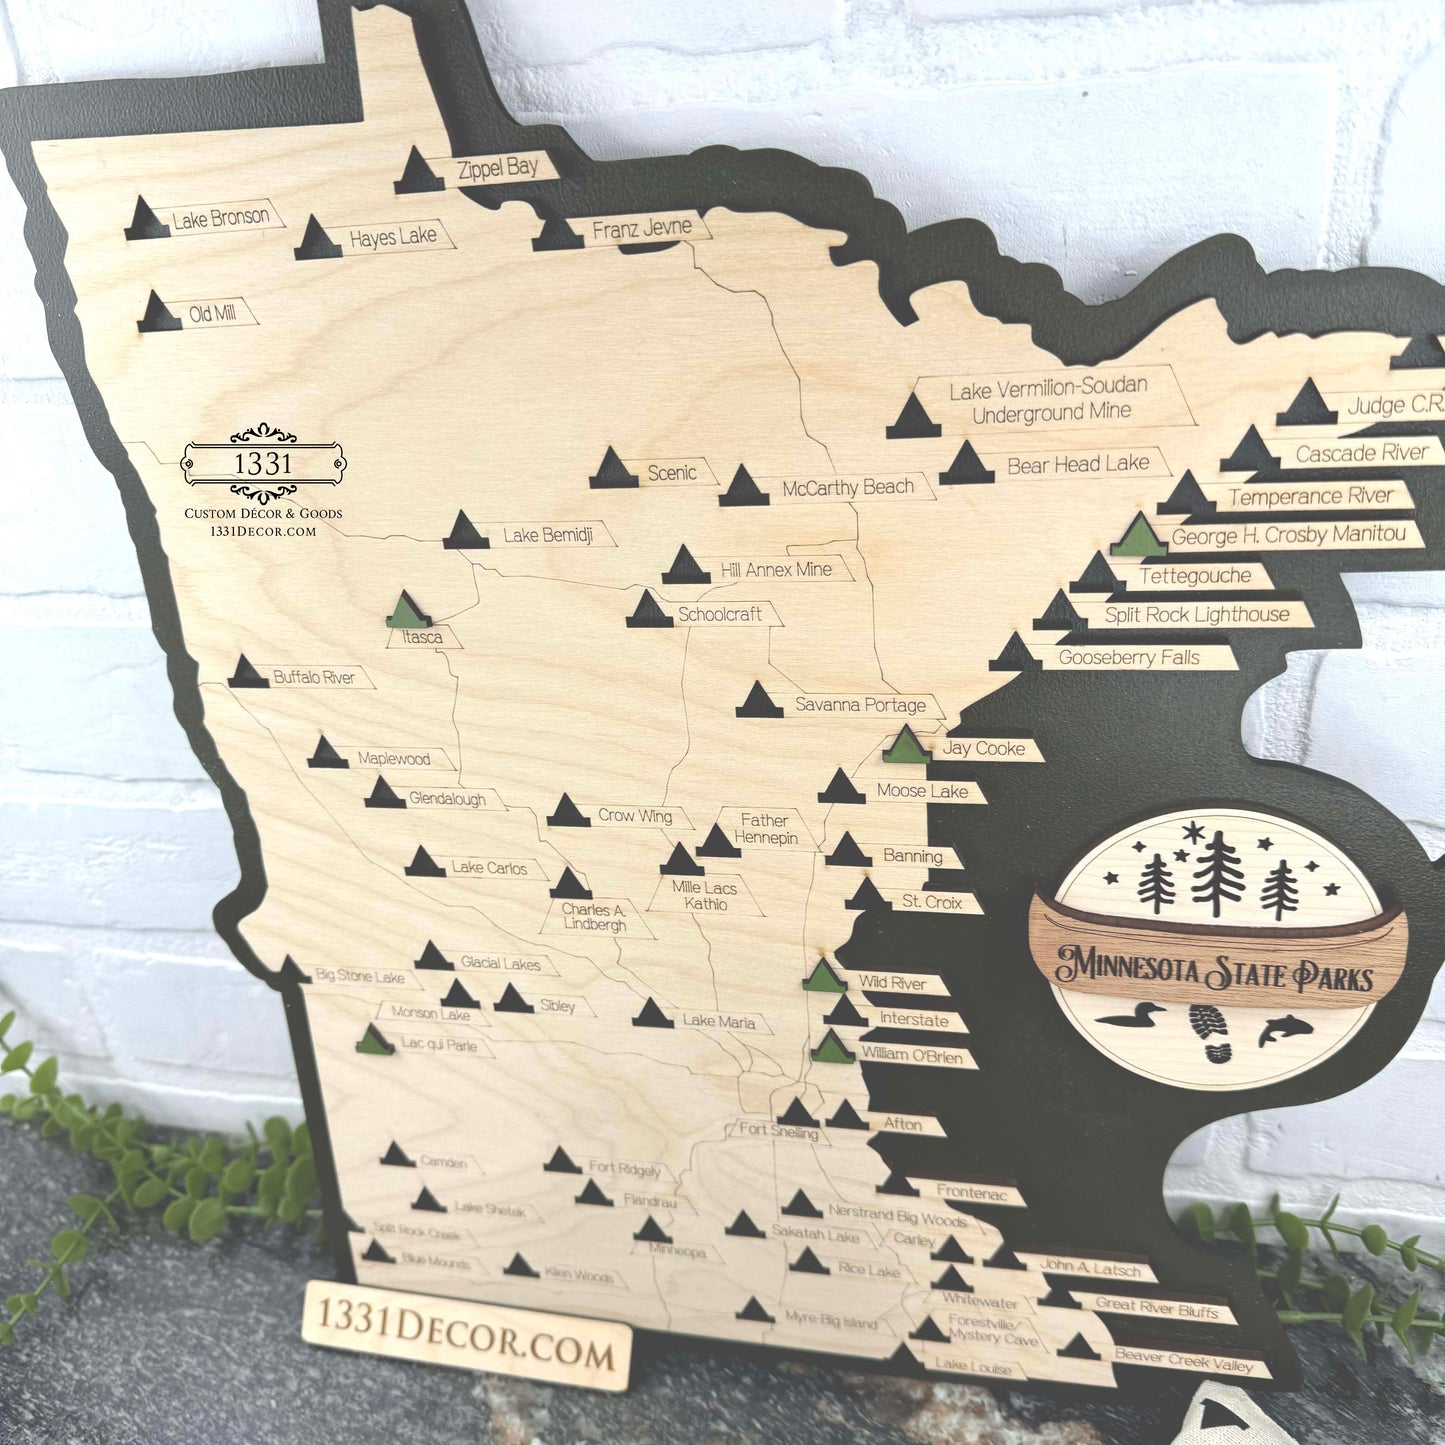 Minnesota State Parks Travel Map